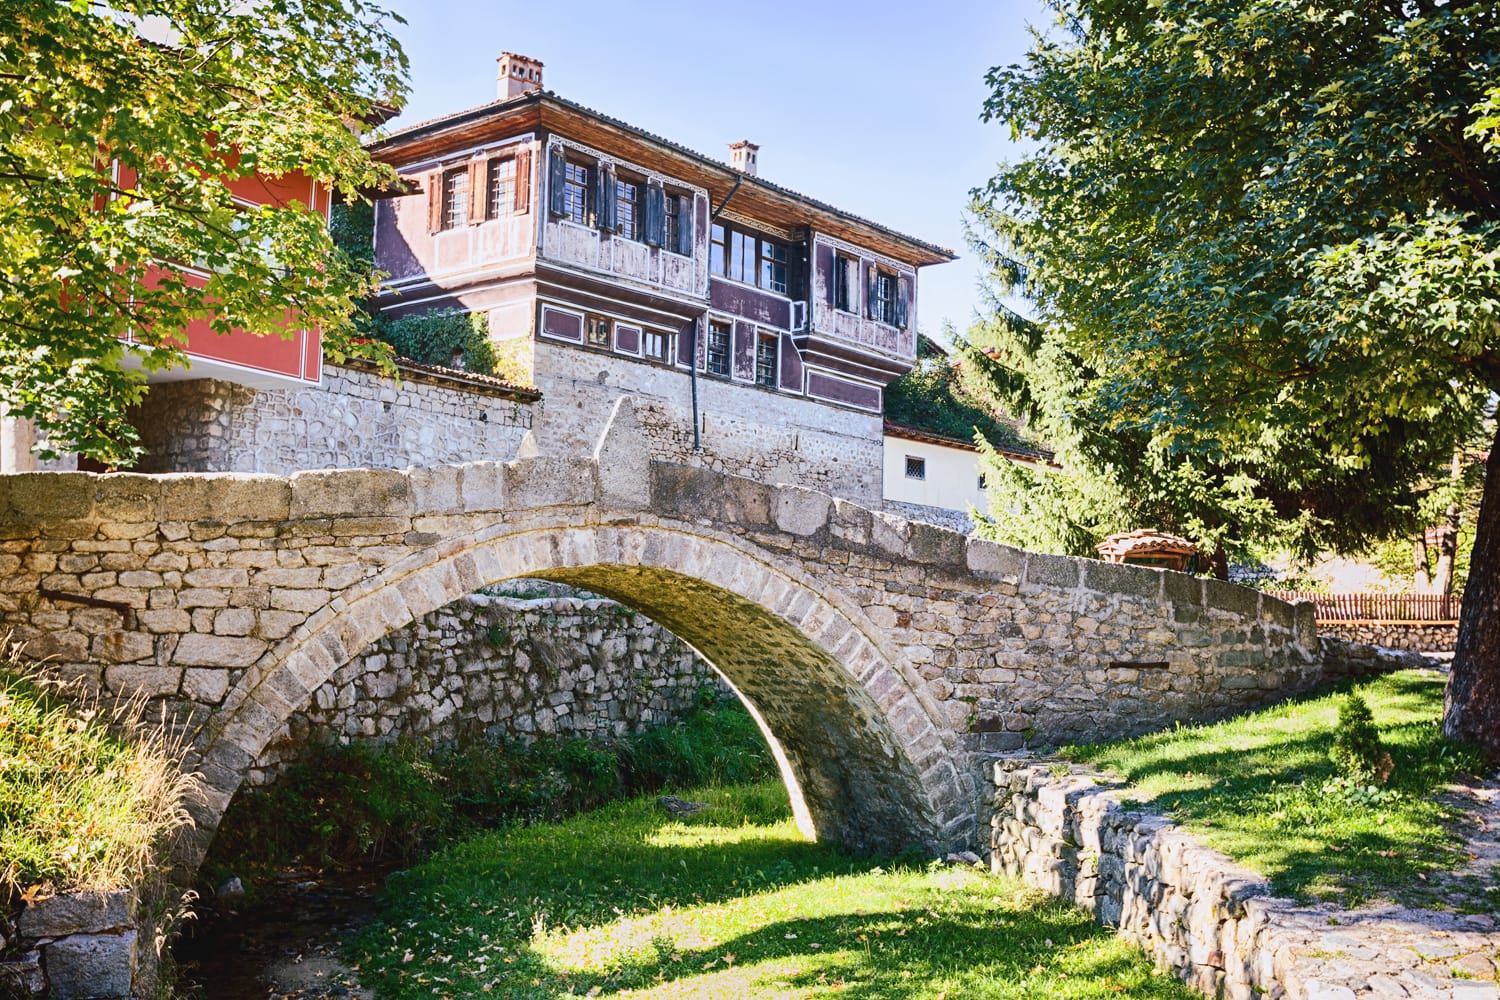 Historic bridge in the town of Koprivshtitsa, Bulgaria where the April Uprising began in 1876.